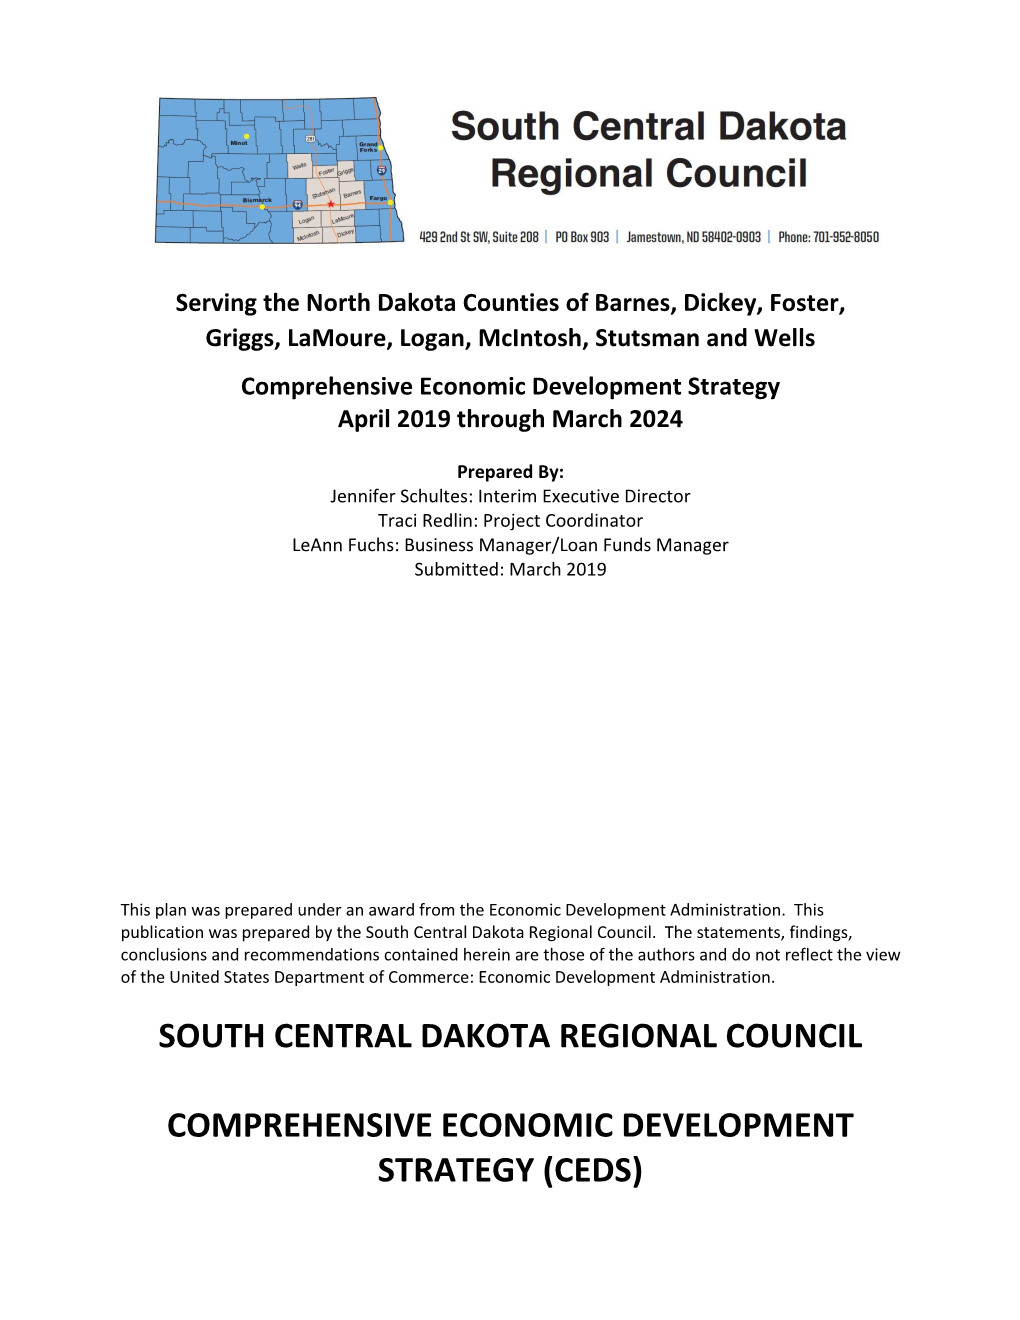 South Central Dakota Regional Council